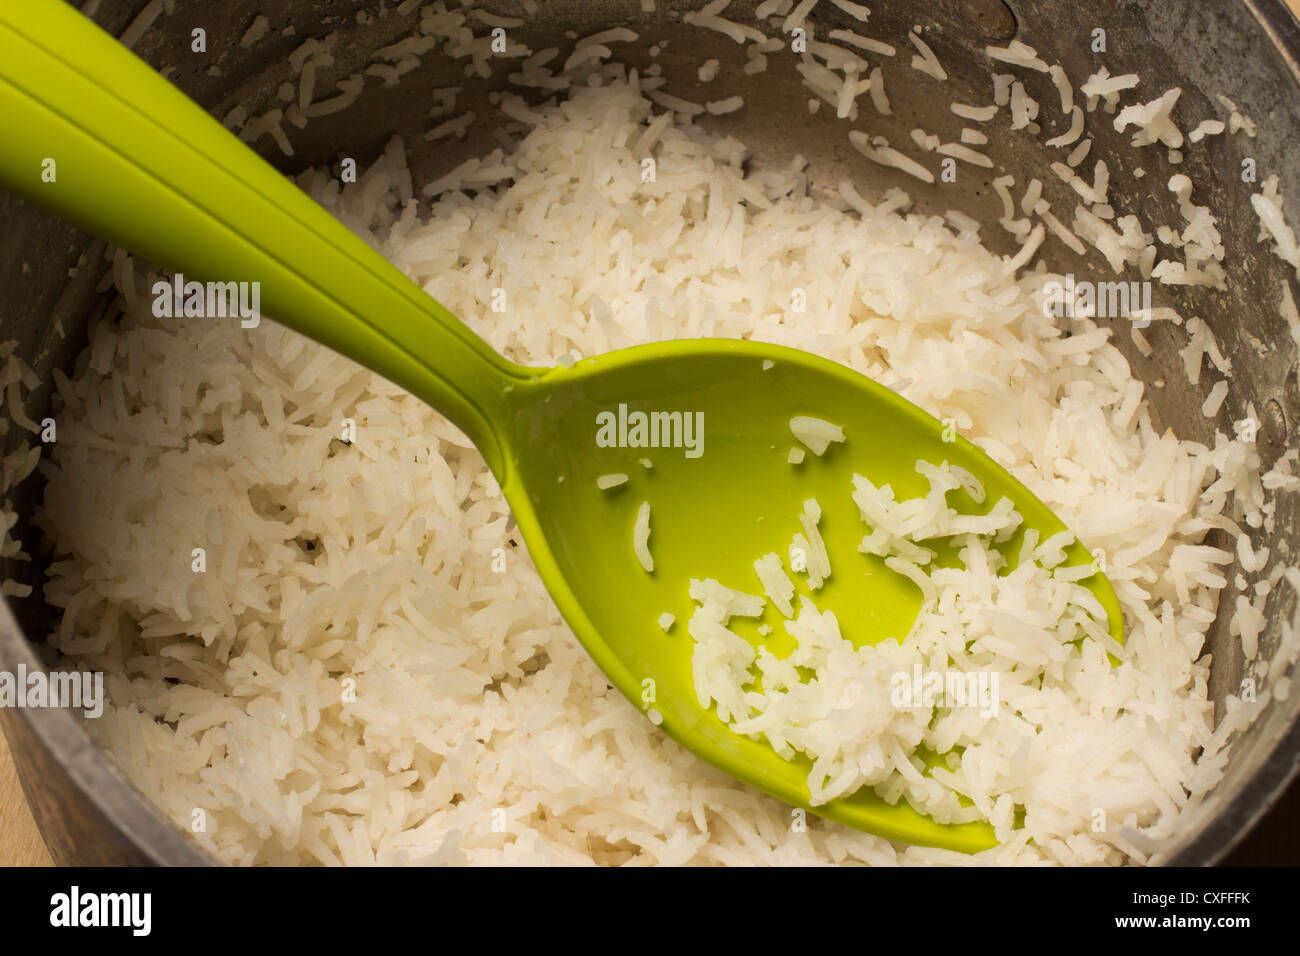 https://c8.alamy.com/comp/CXFFFK/almost-empty-pot-of-cooked-rice-CXFFFK.jpg